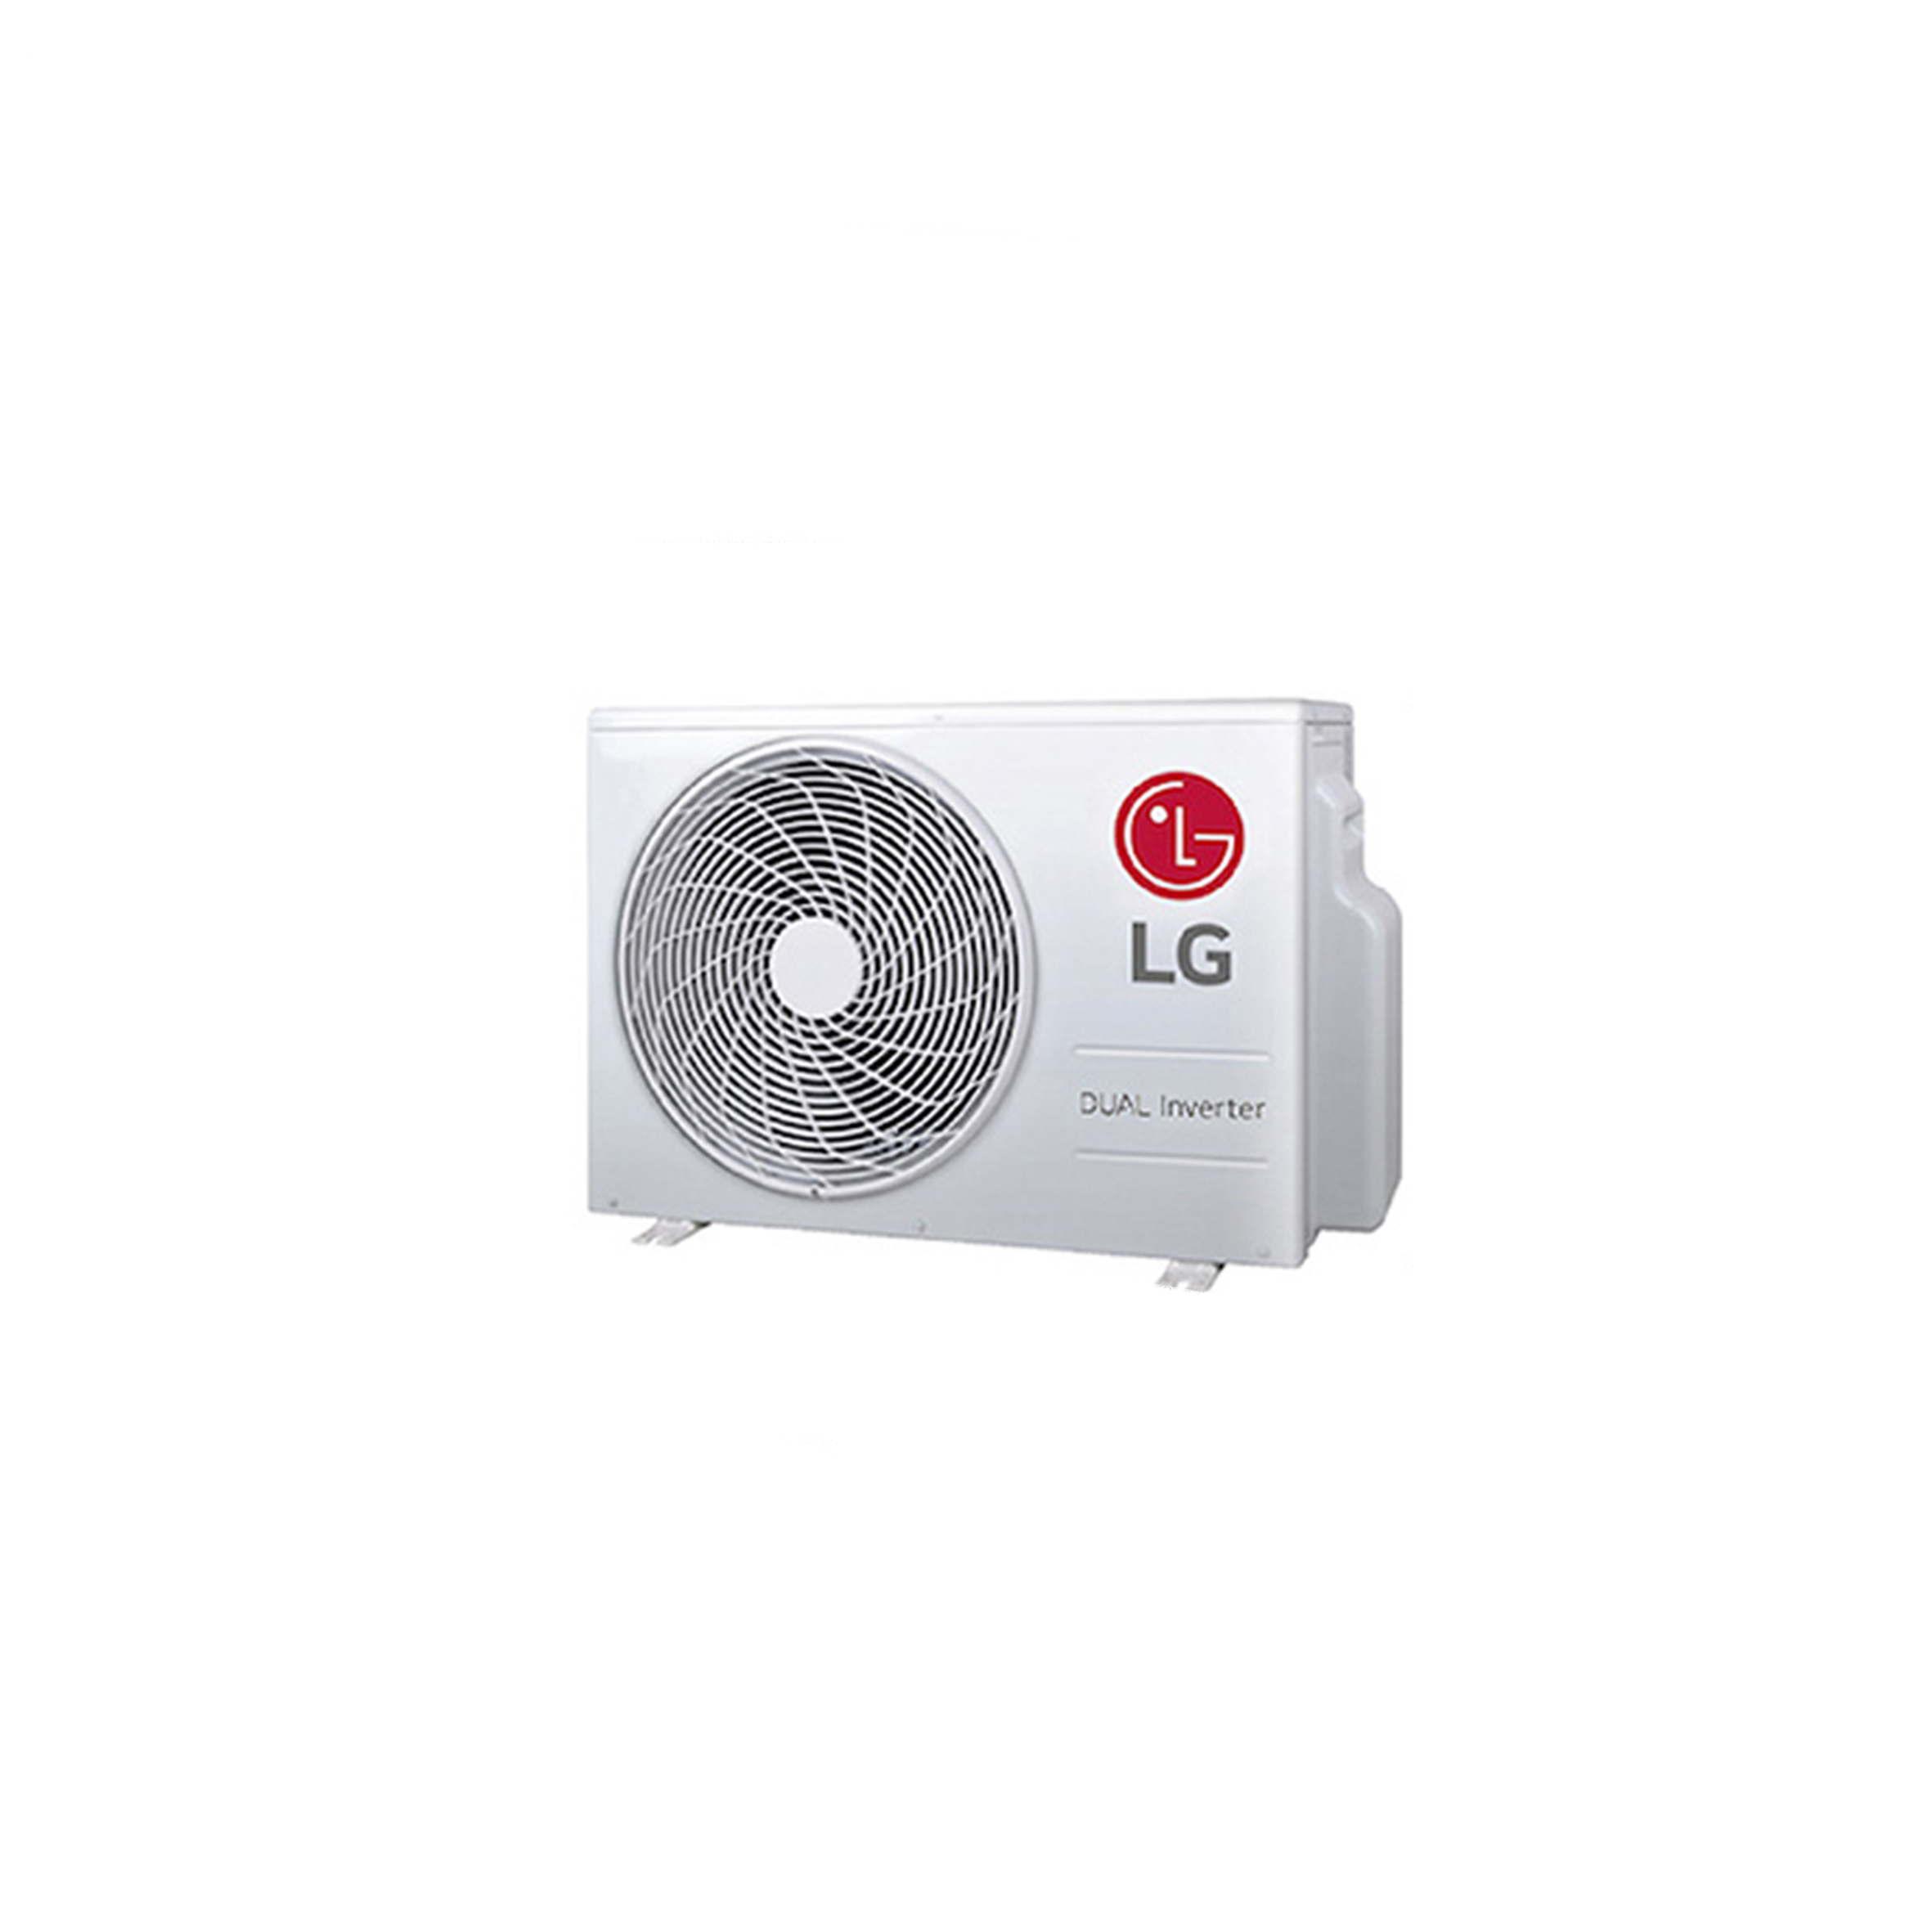 LG樂金 經典系列 變頻冷暖分離式空調 LSN52SHP LSU52SHP 免卡分期